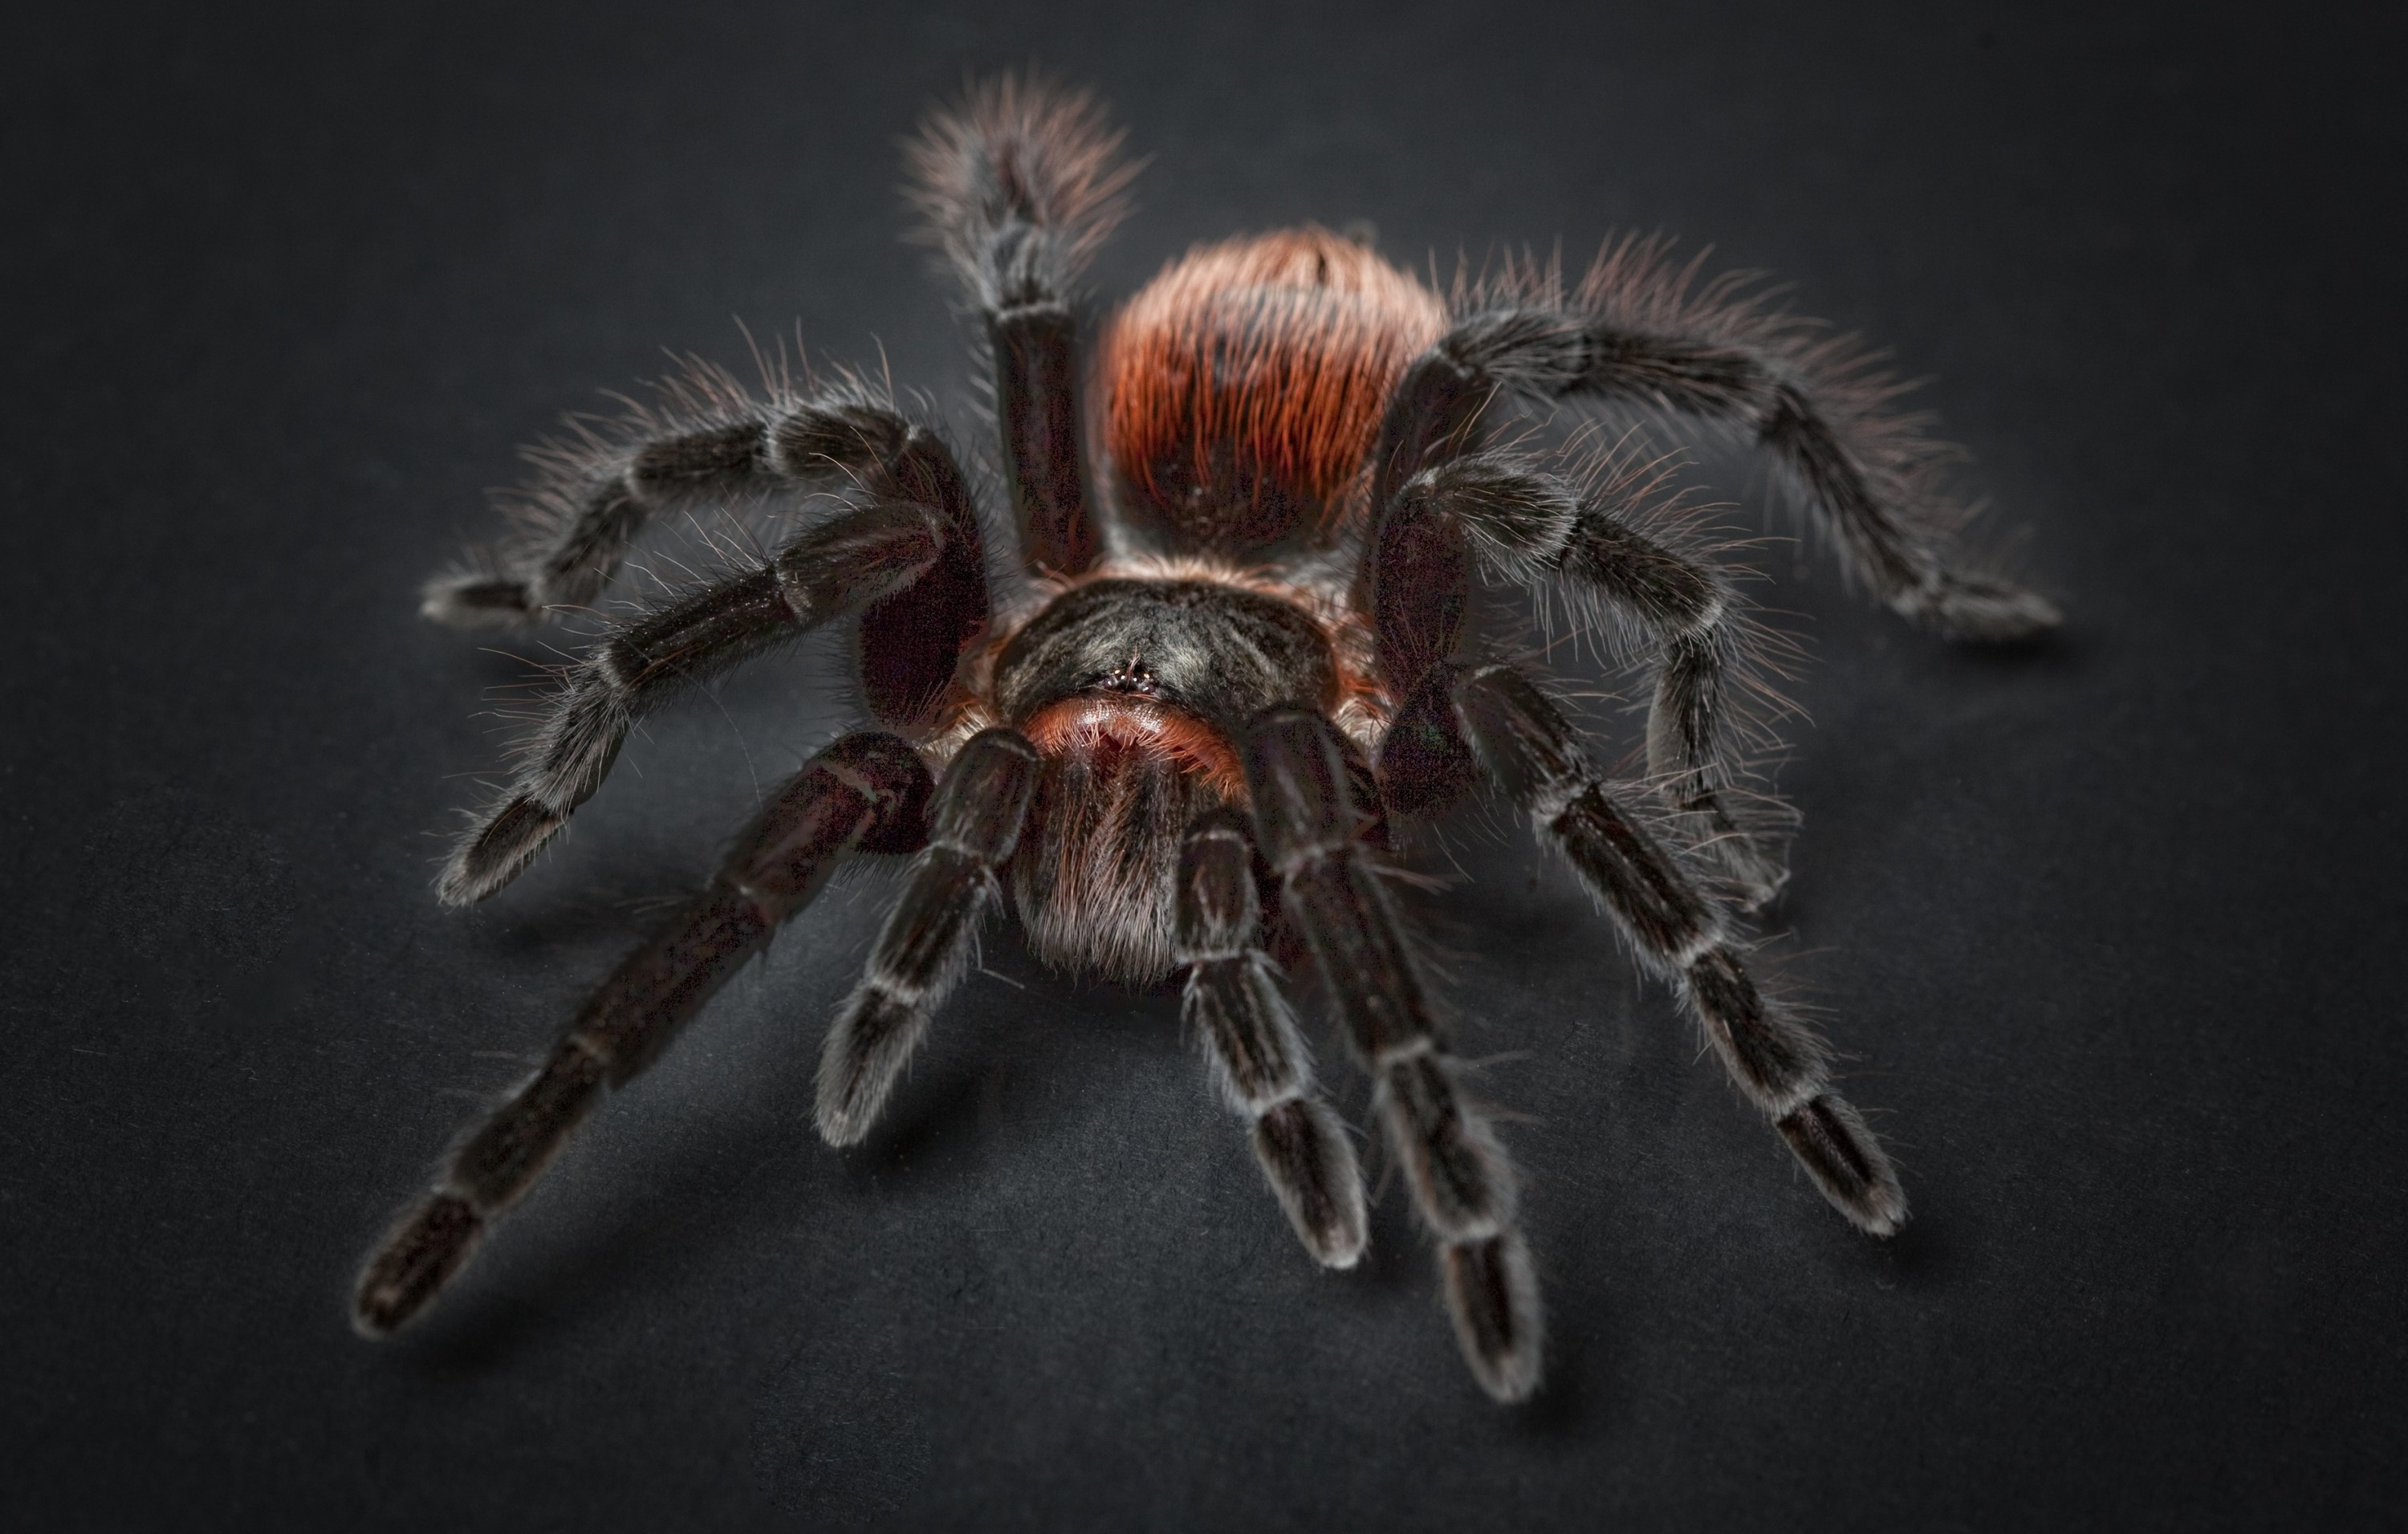 Tarantula macro art, Close-up insect detail, Stunning spider wallpapers, Nature's beauty, 3000x1920 HD Desktop